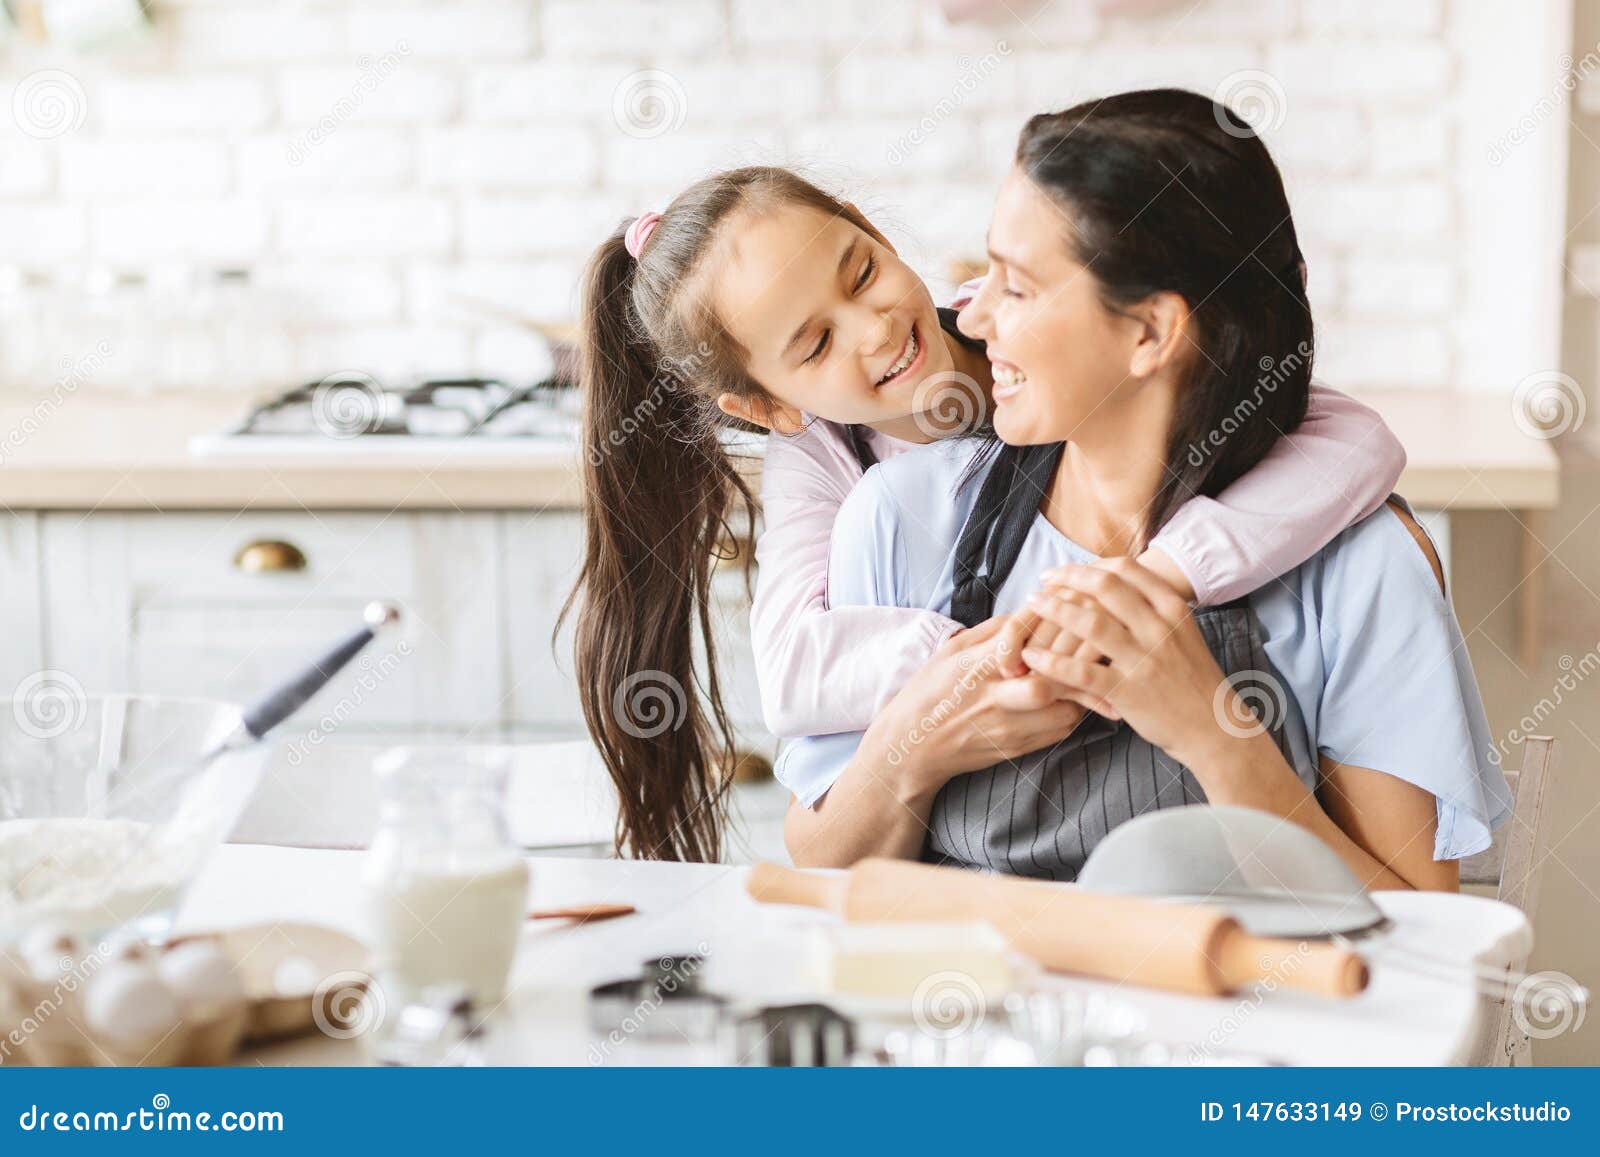 Loving Daughter Hugging Her Mother On Kitchen Stock Image Image Of Concept Infant 147633149 